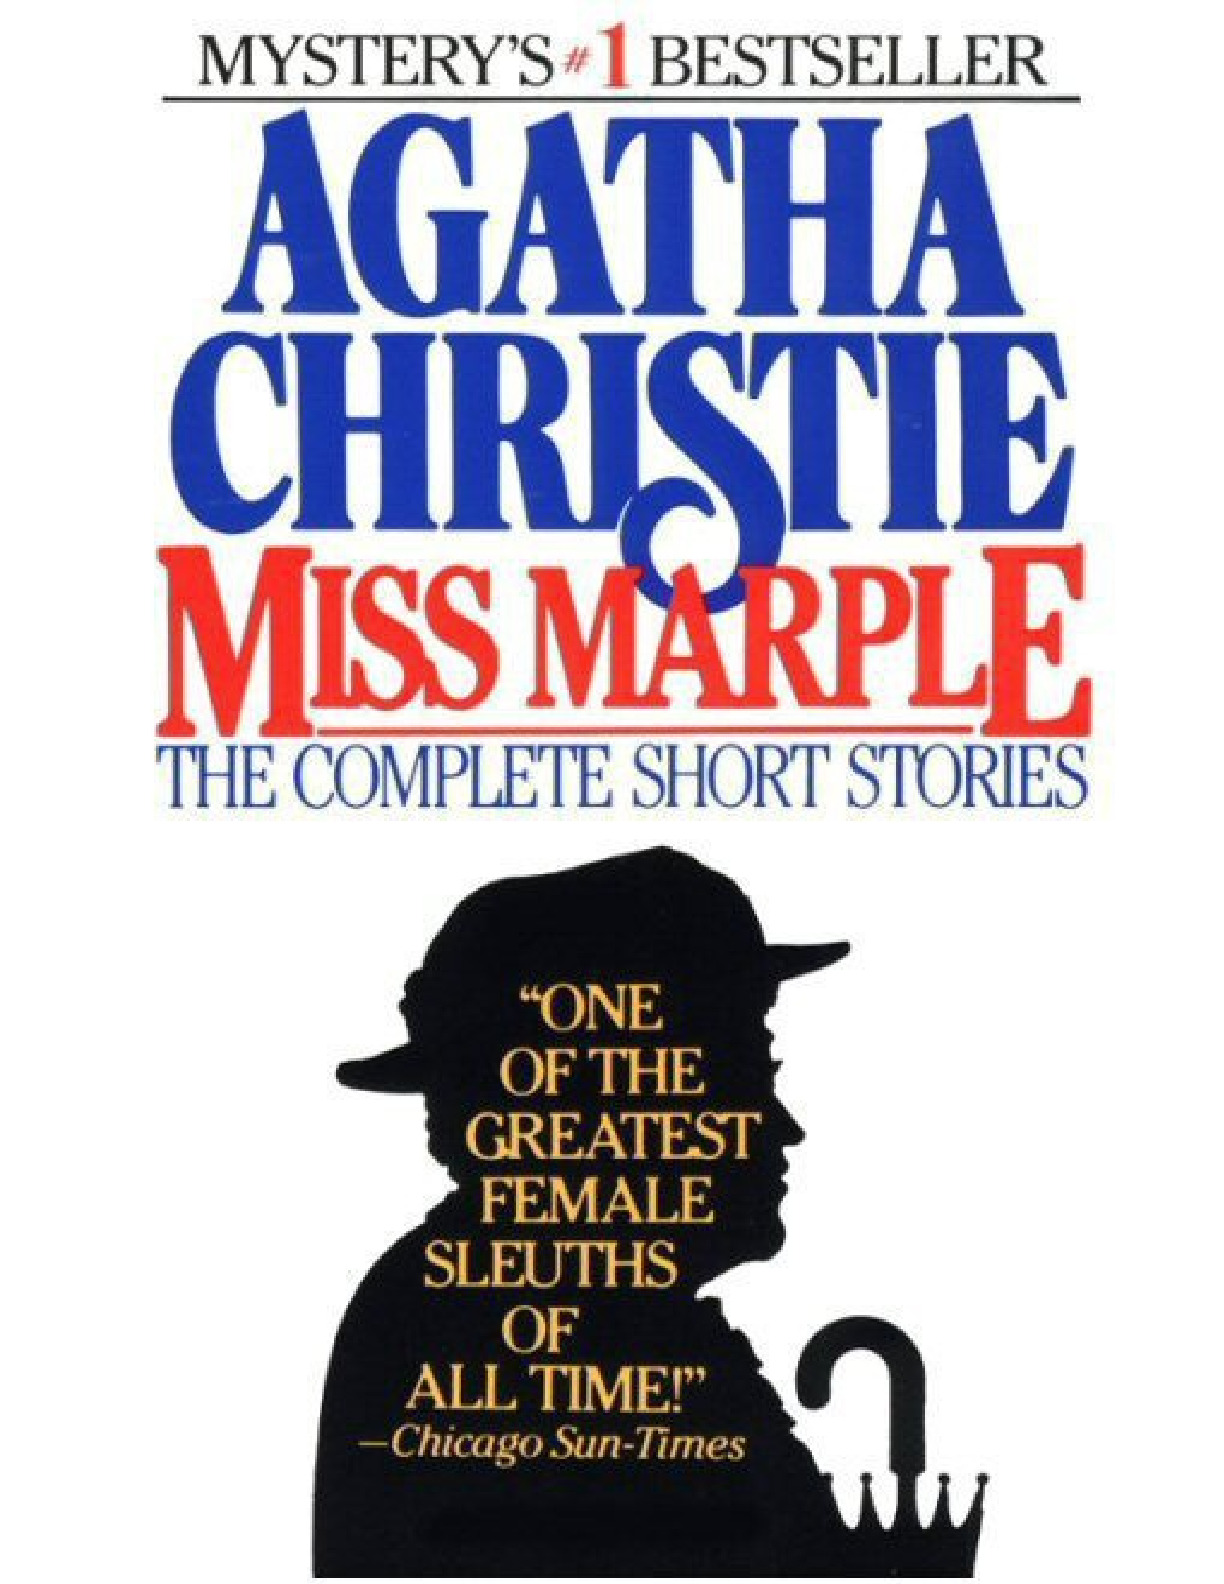 Complete Short Stories of Miss Marple – Agatha Christie